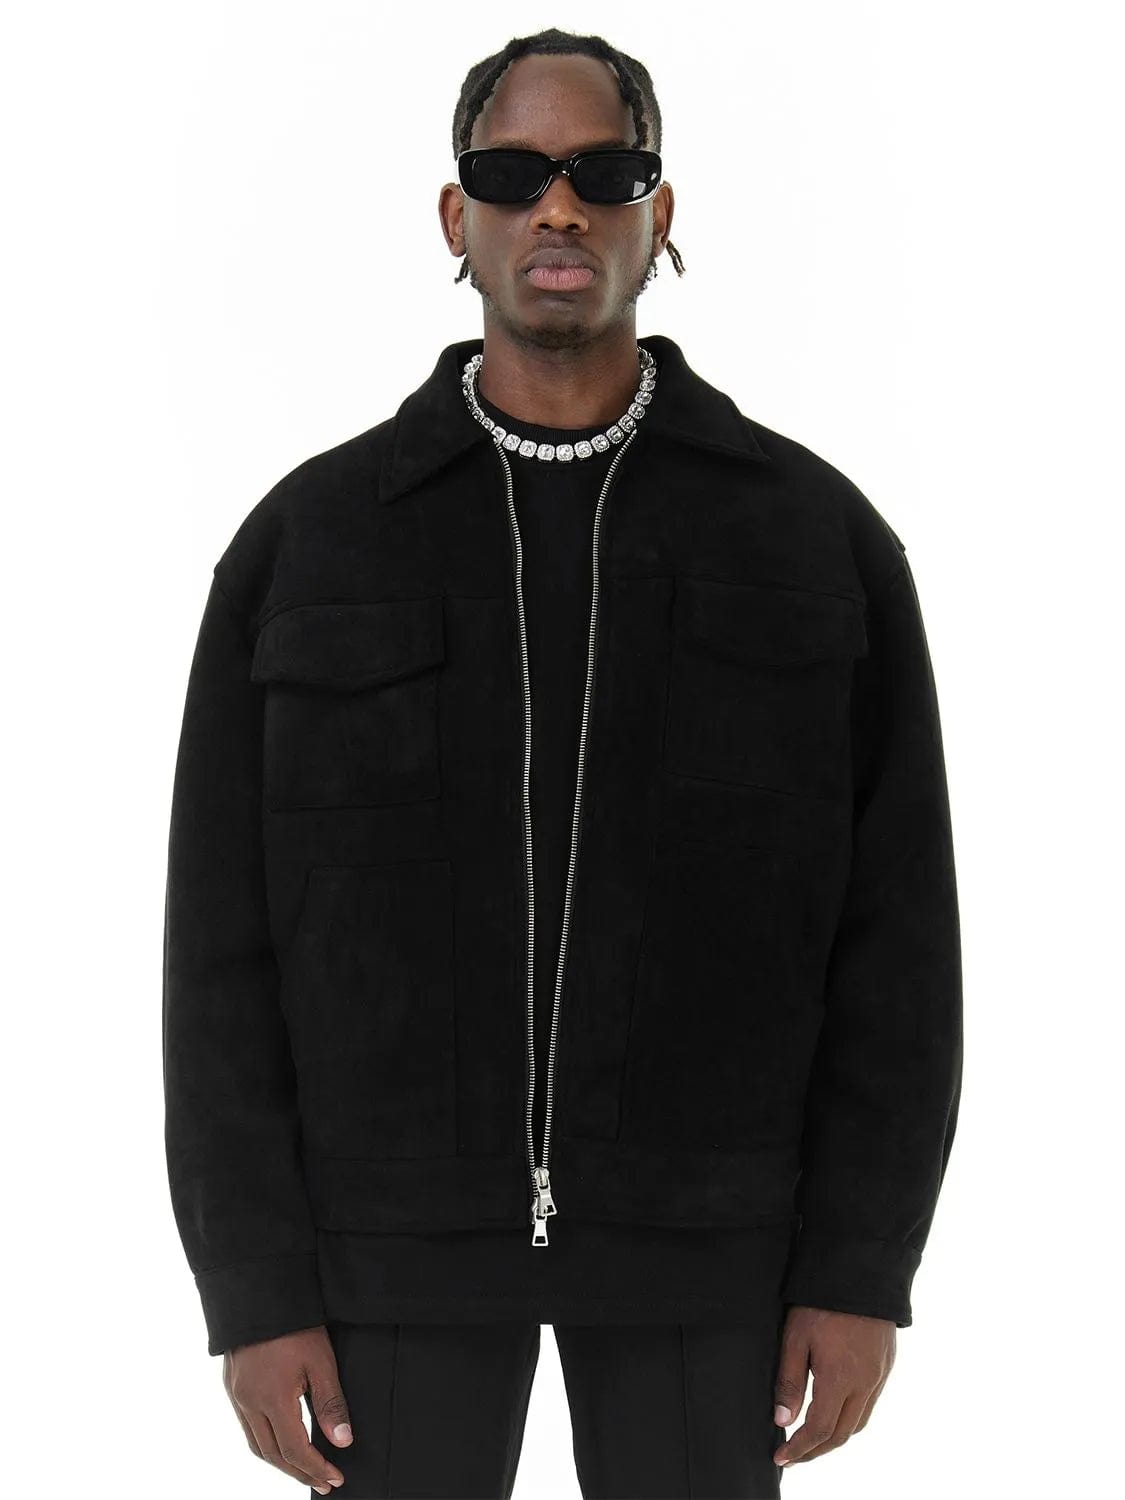 Y2K  Vintage High Street Suede Material Crock Jacket With Zipper Lapel Casual Short Jacket For Men